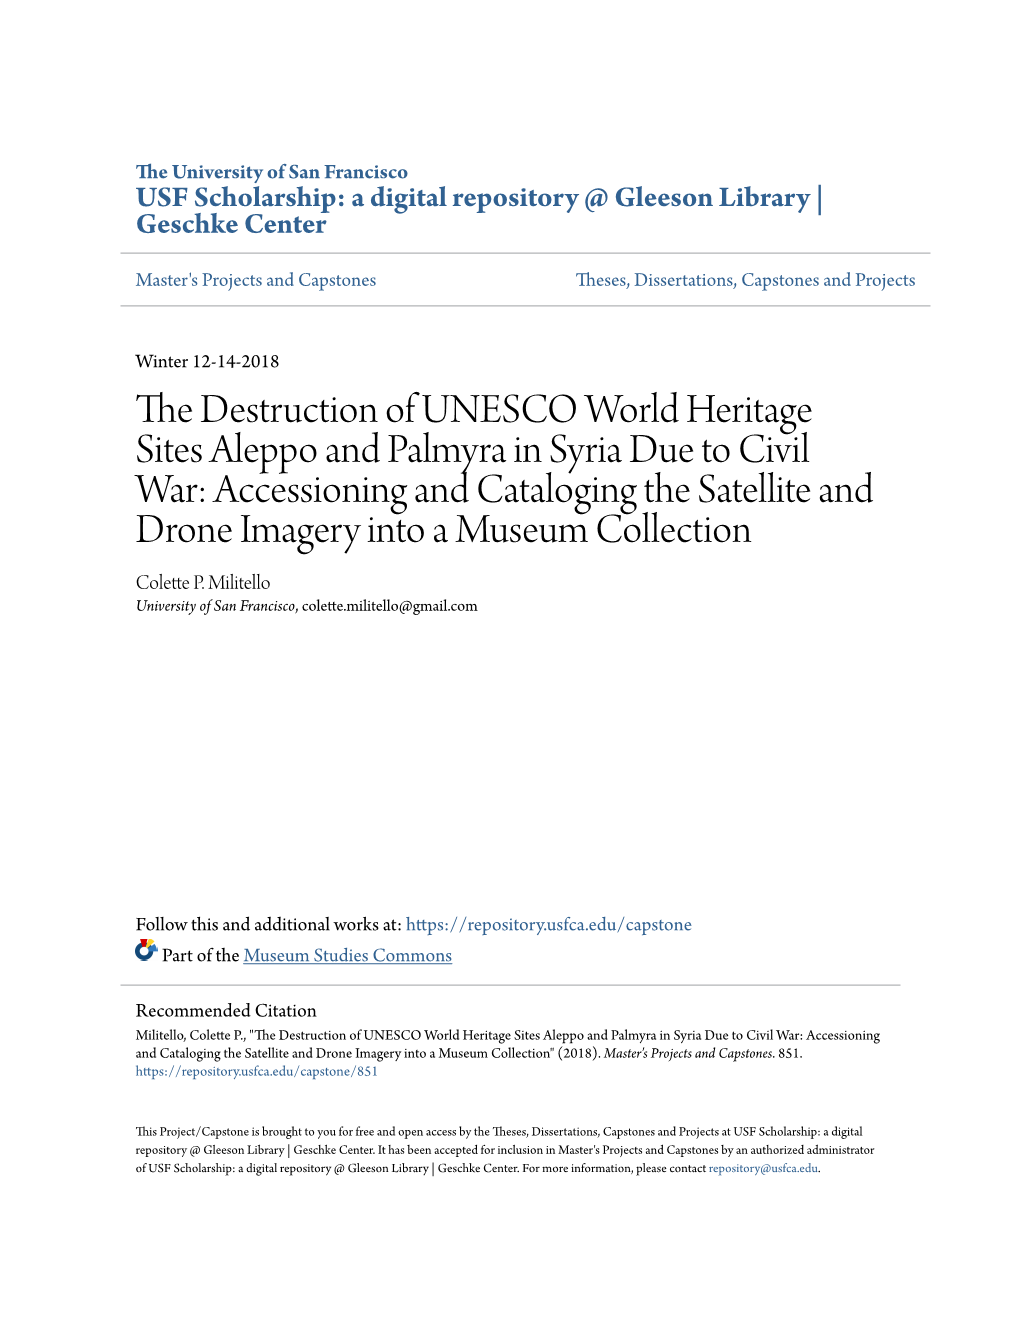 The Destruction of UNESCO World